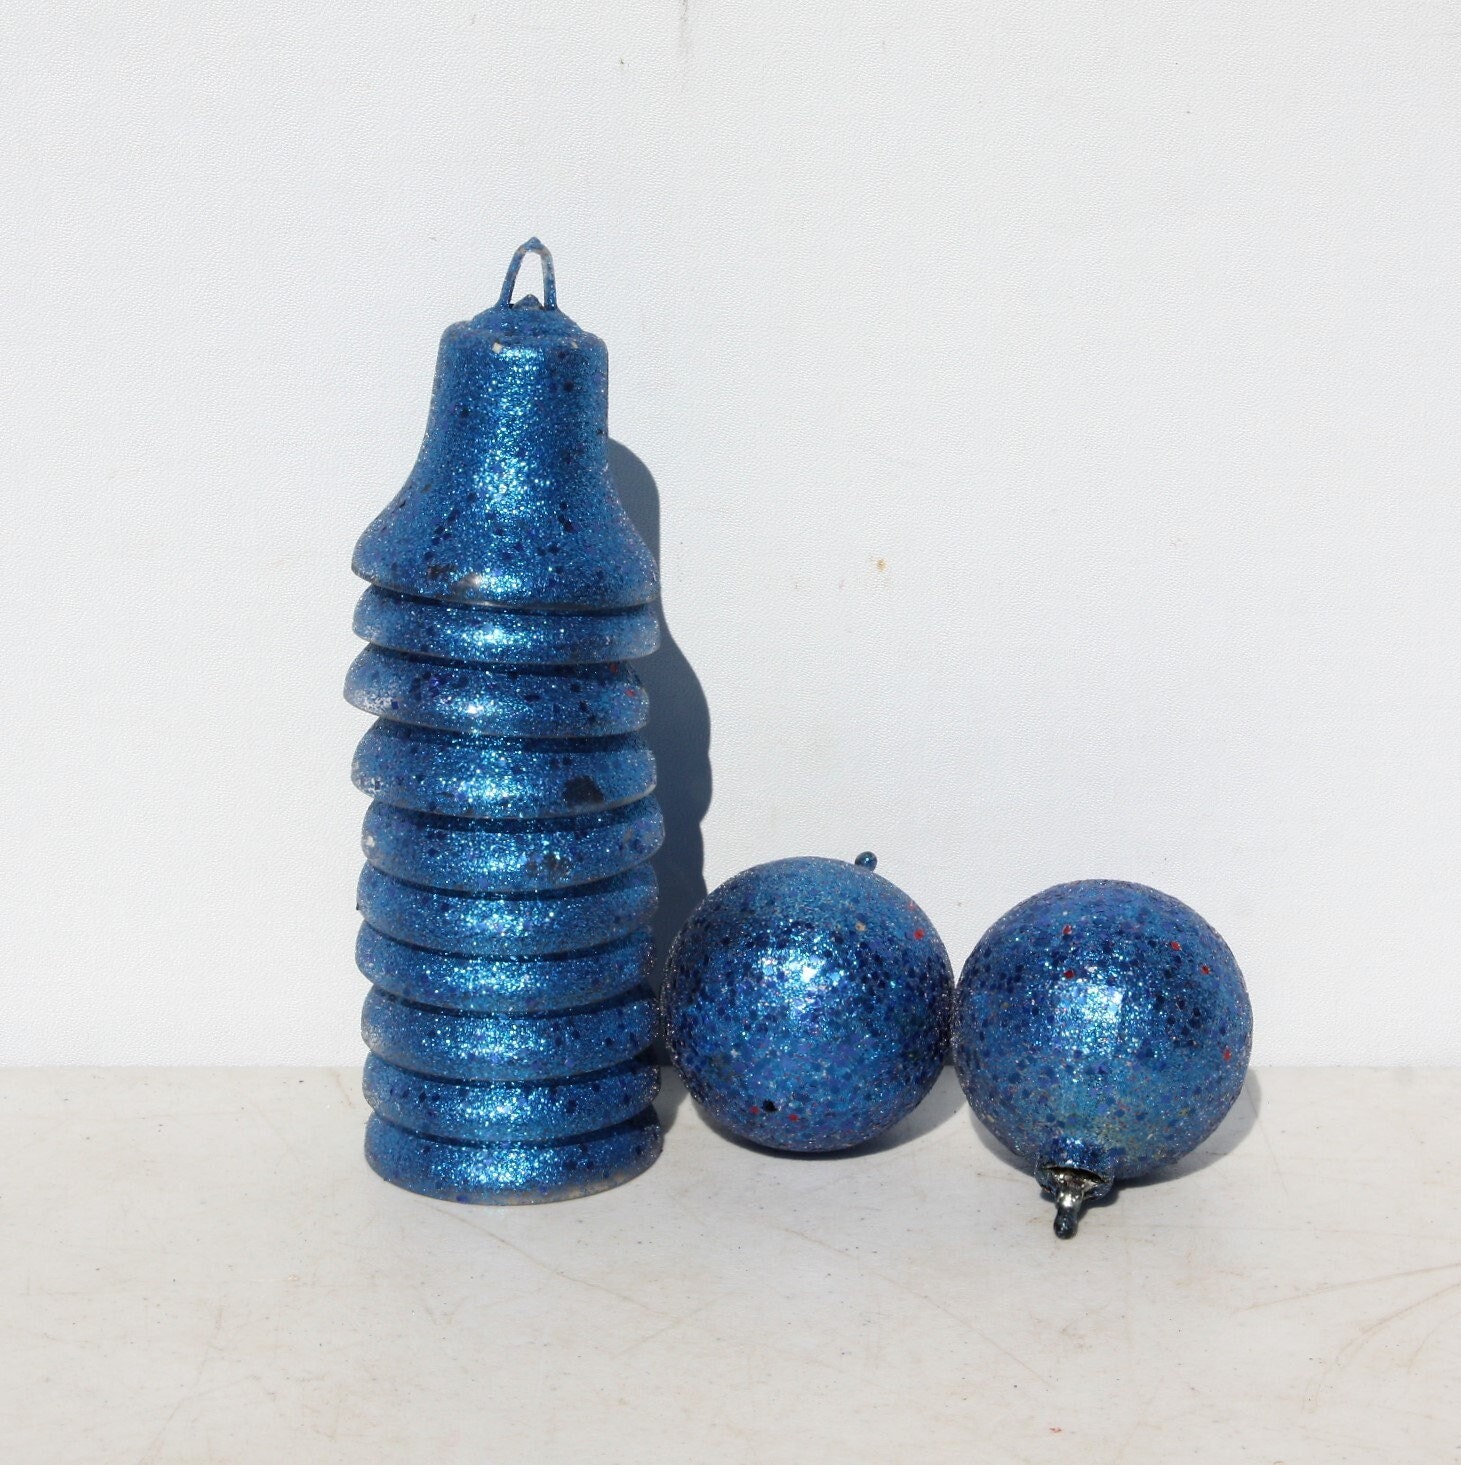 48 4 Dozen Complete Ornaments Clear Plastic Ball Fillable Ornament Favor  1.5 40mm 